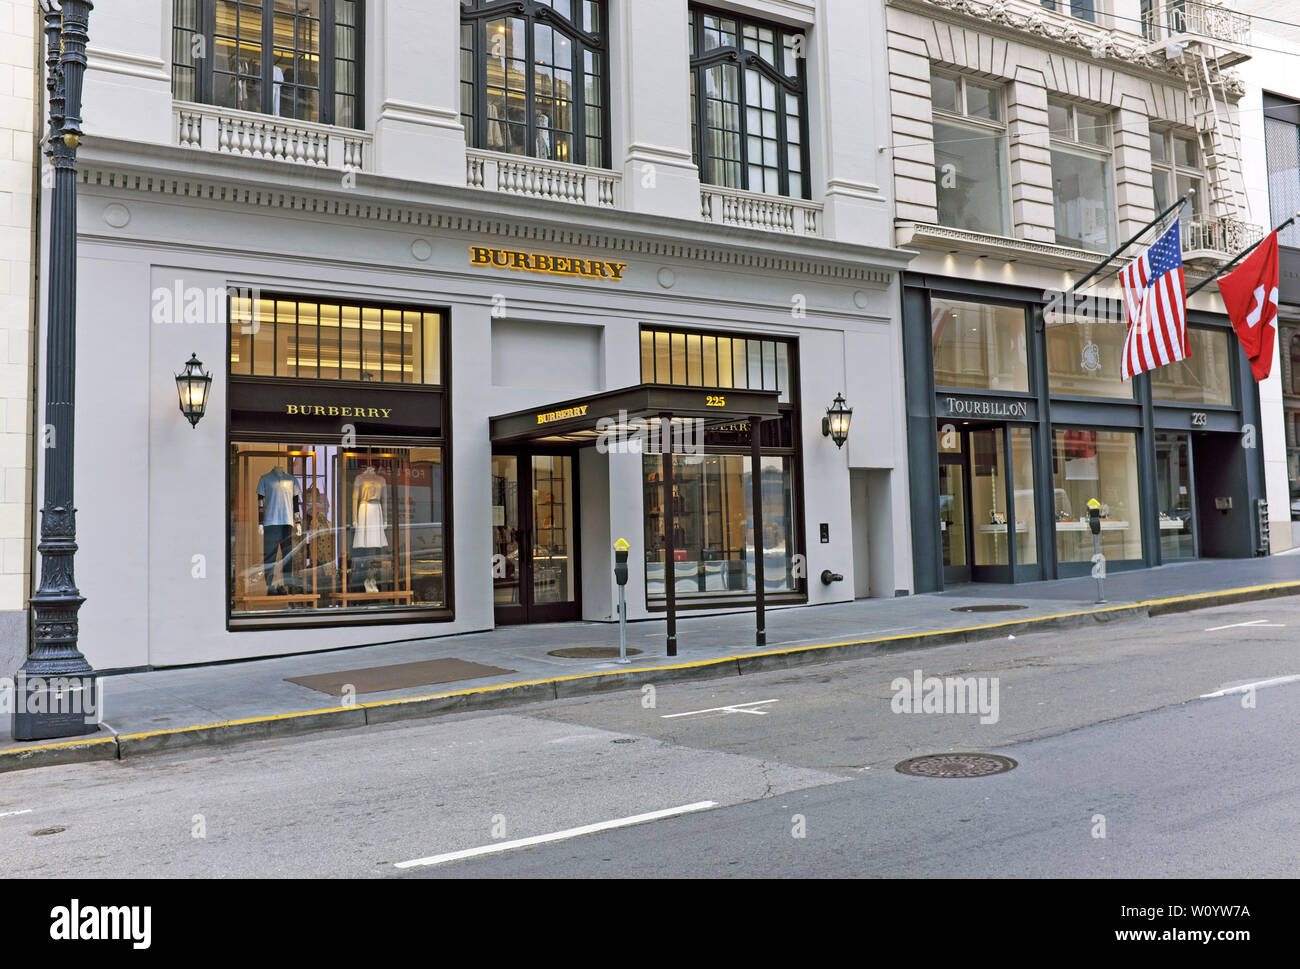 Burberry, the British upscale luxury fasion retailer, storefront location in San Francisco, California, USA. Stock Photo